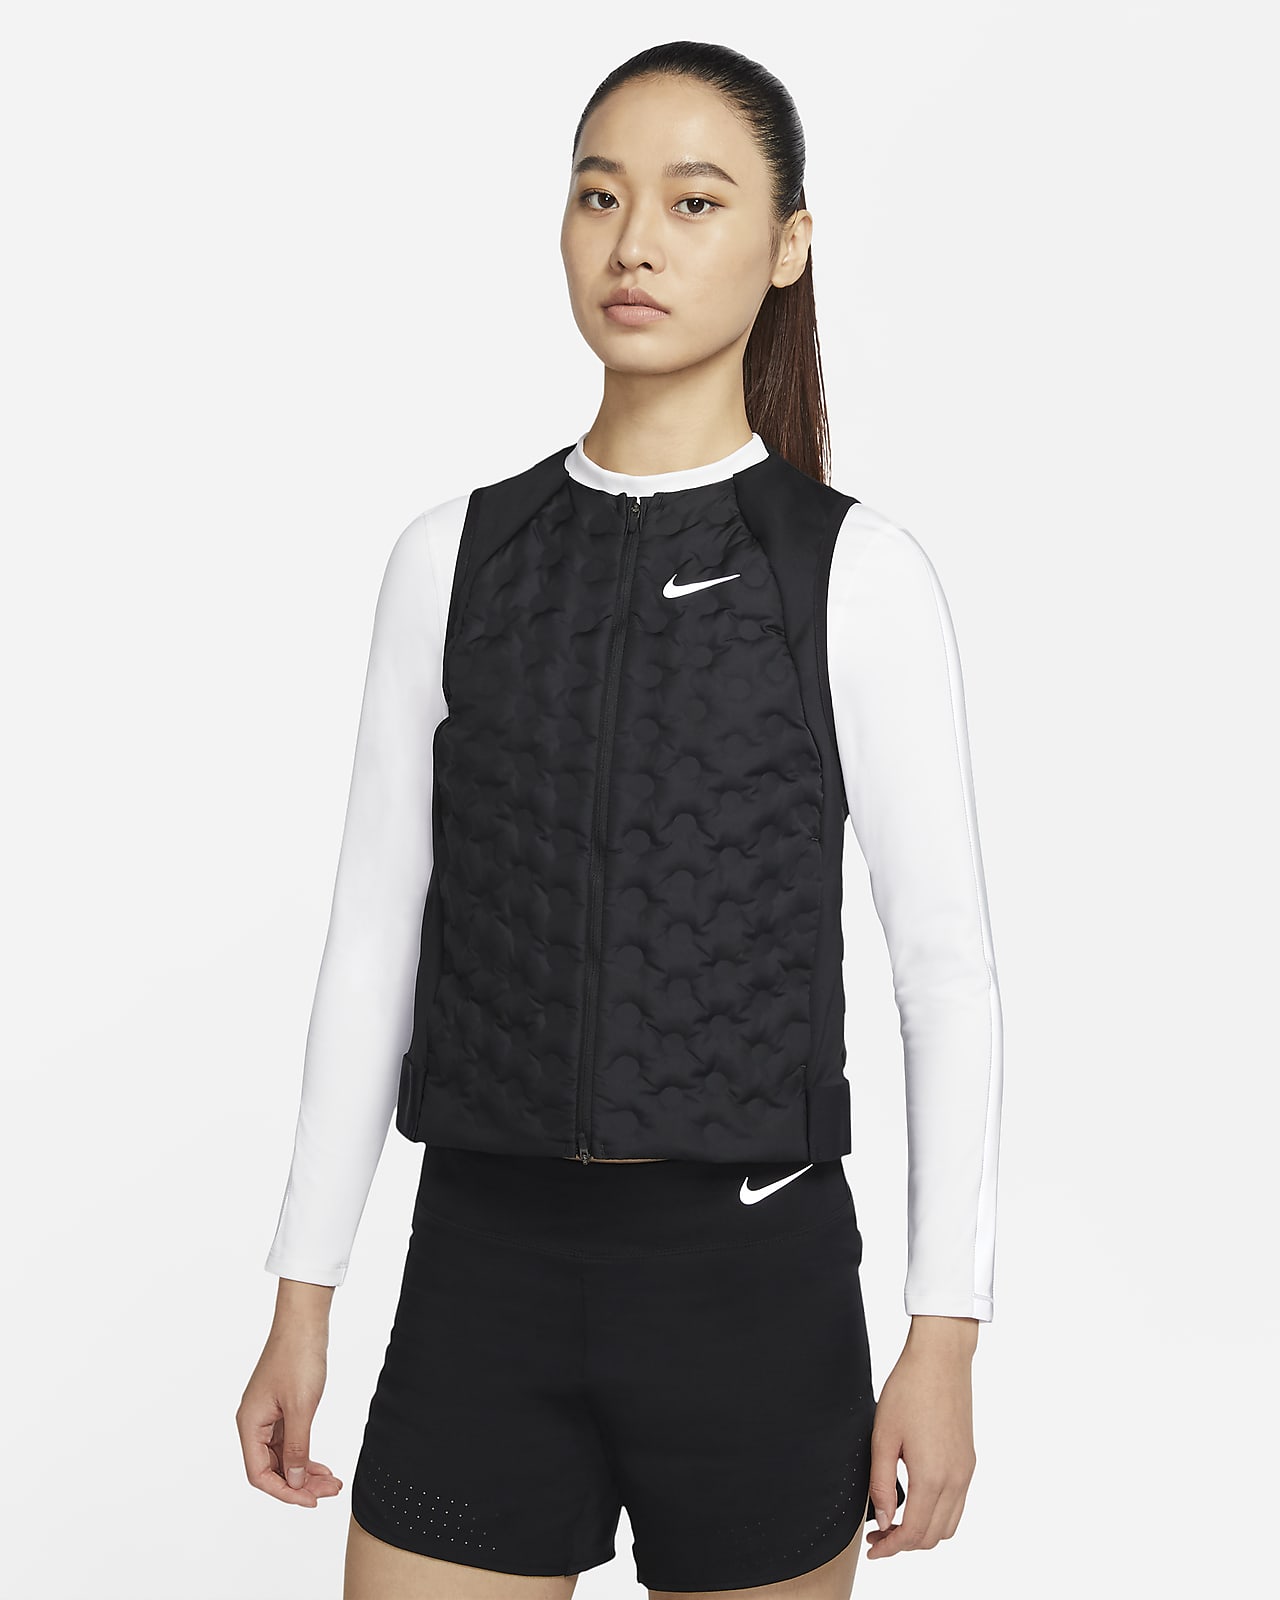 nike women's running vests